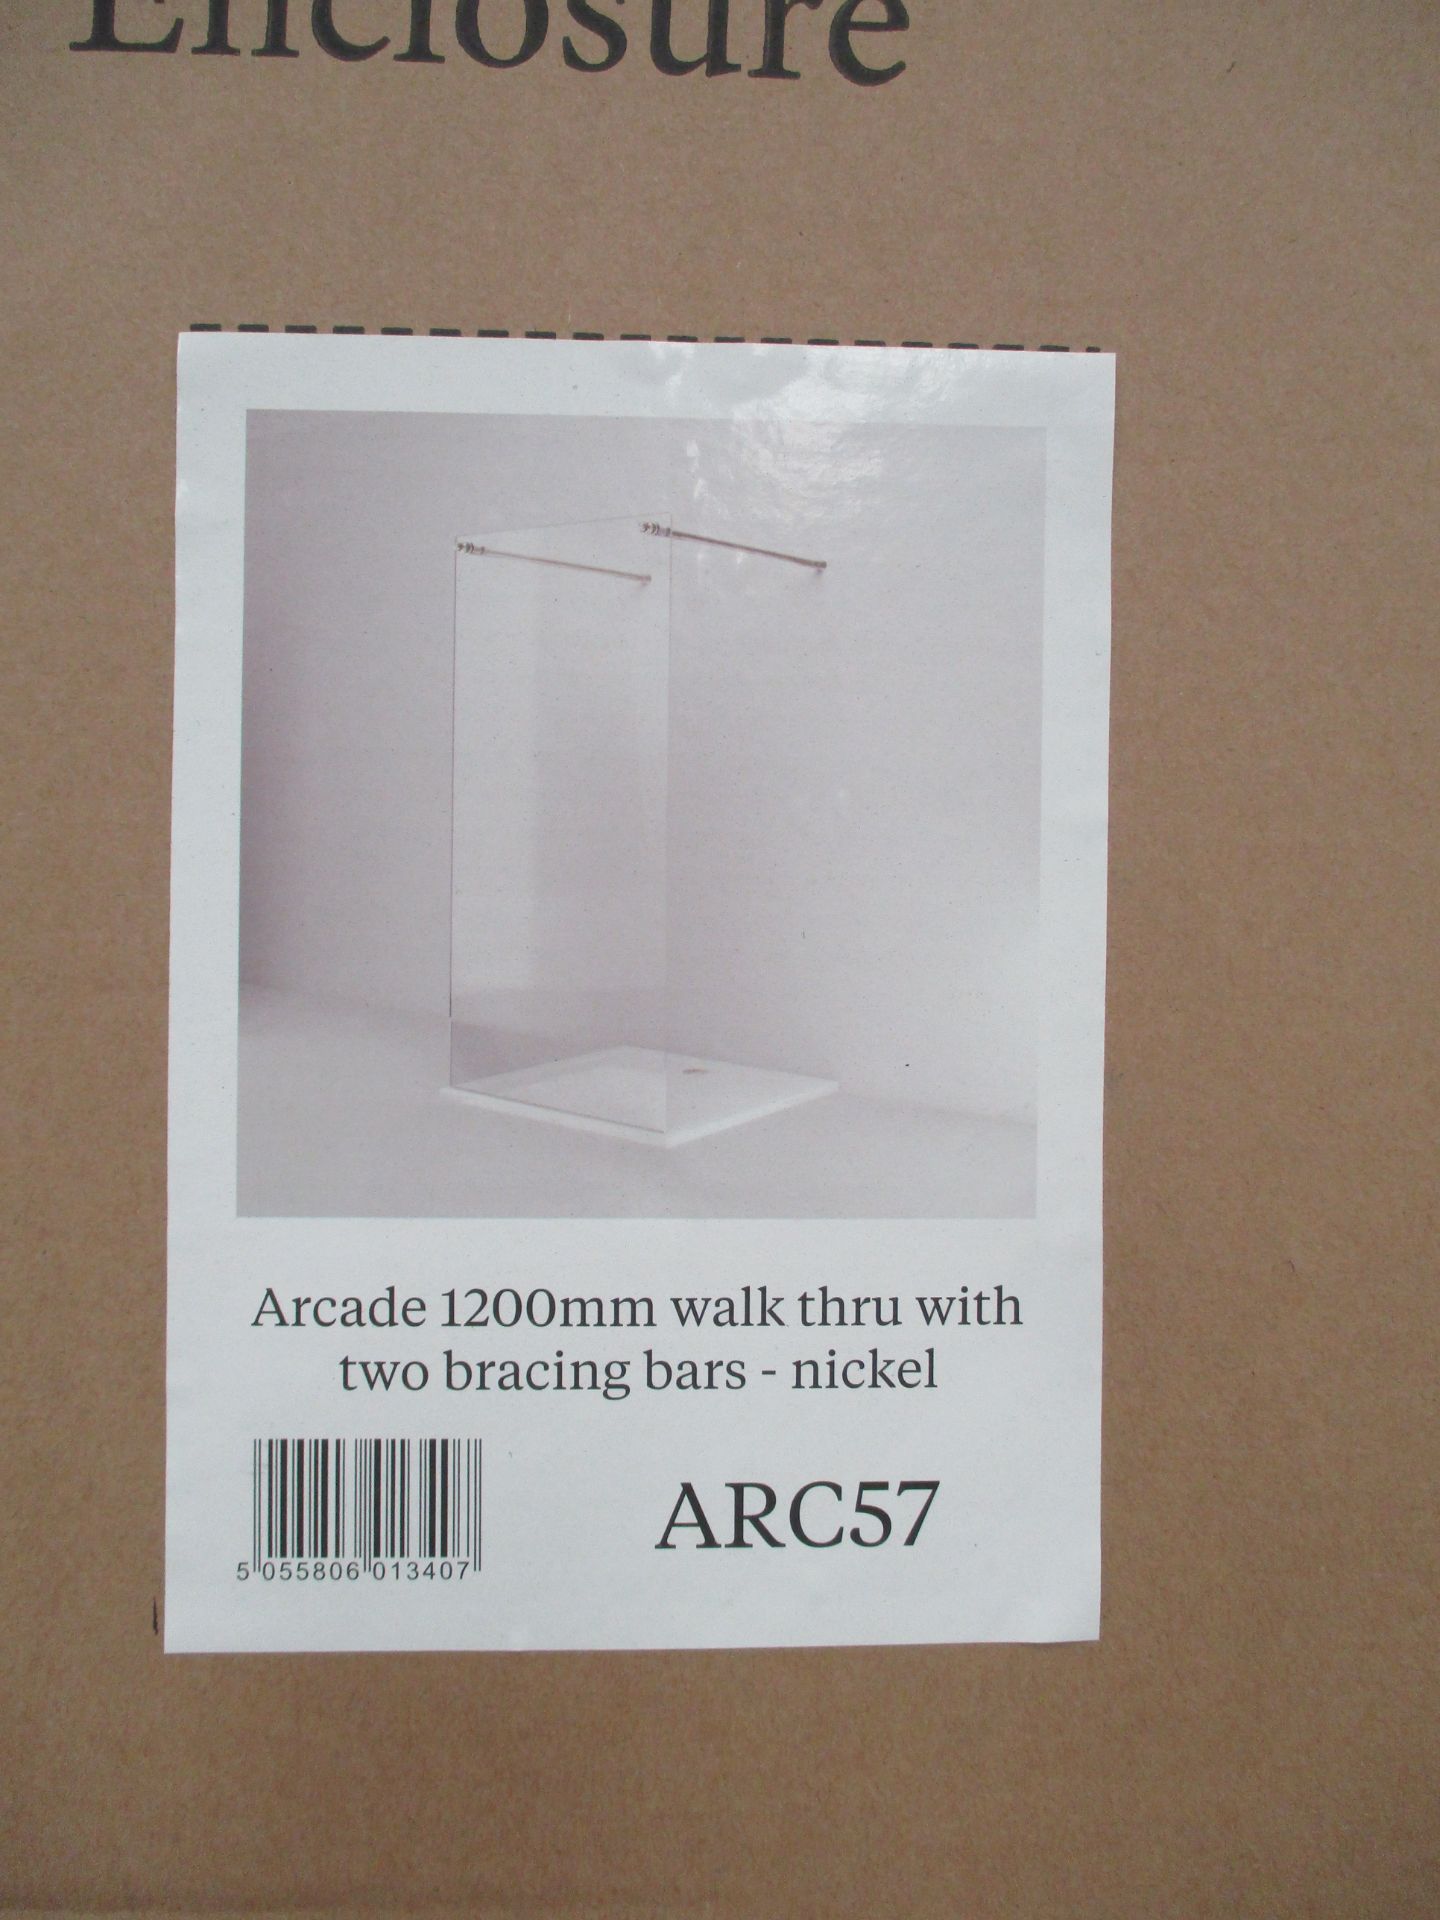 An Arcade 1200mm walk thru shower screen with two bracing bars nickel framed model ARC57 (boxed)